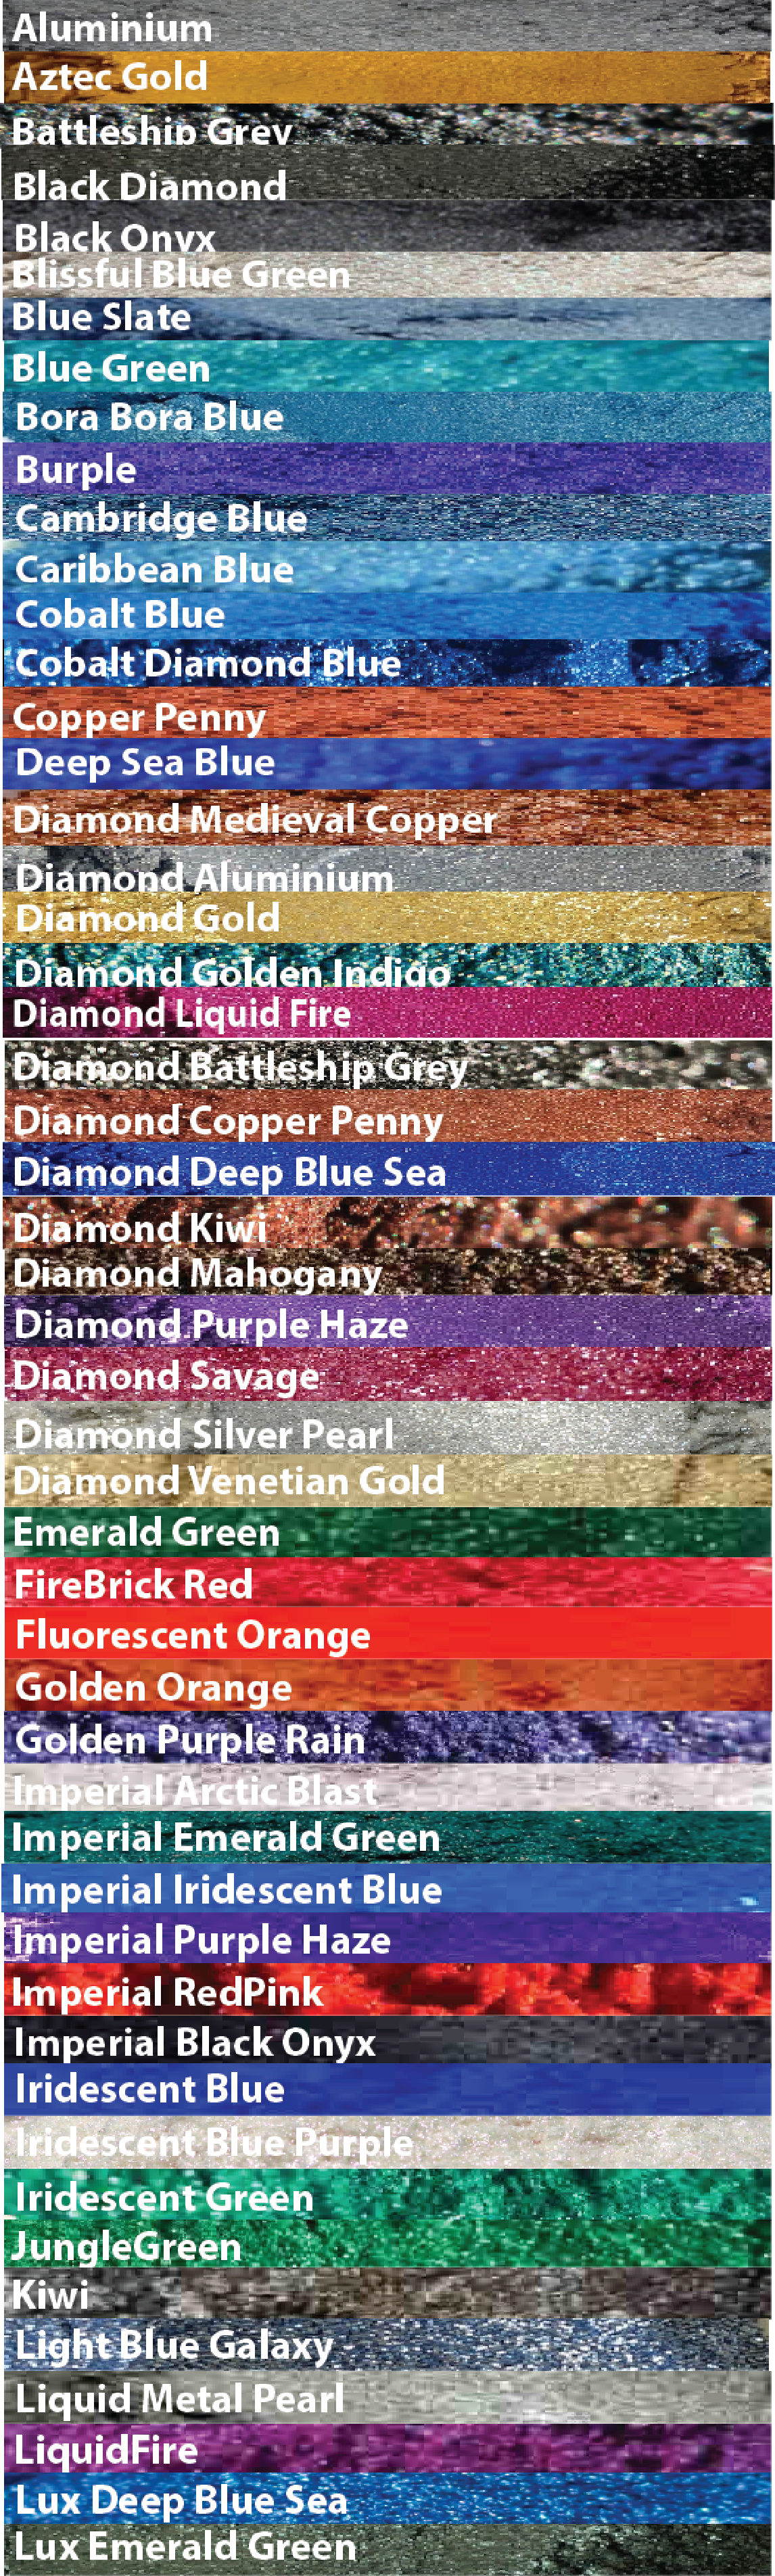 "DIAMOND KIWI" Black Diamond Pigments